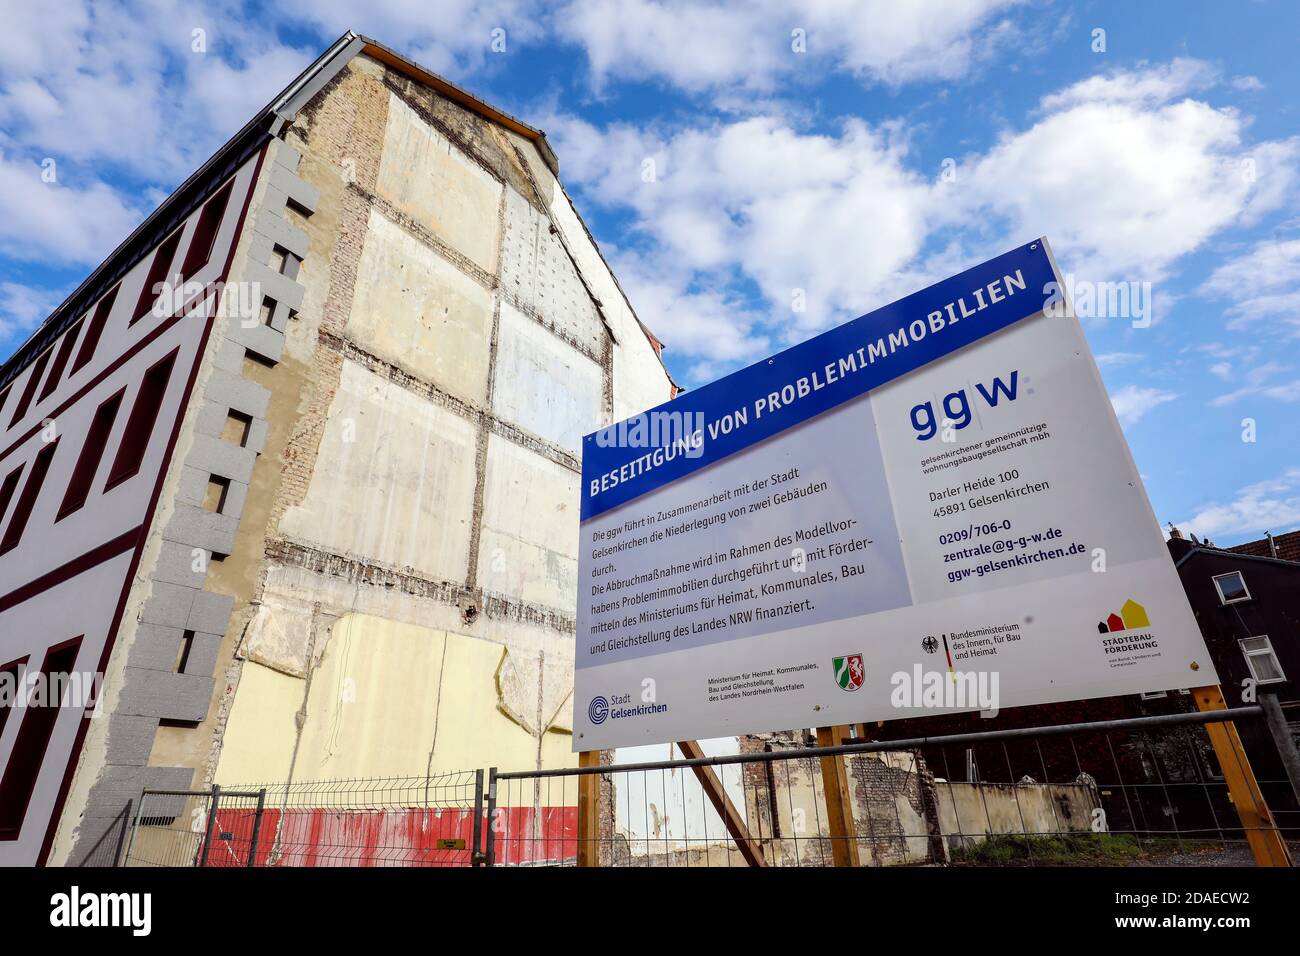 Gelsenkirchen, Ruhr area, North Rhine-Westphalia, Germany - removal of problem properties, information board of the ggw Gelsenkirchen non-profit housing association. Stock Photo